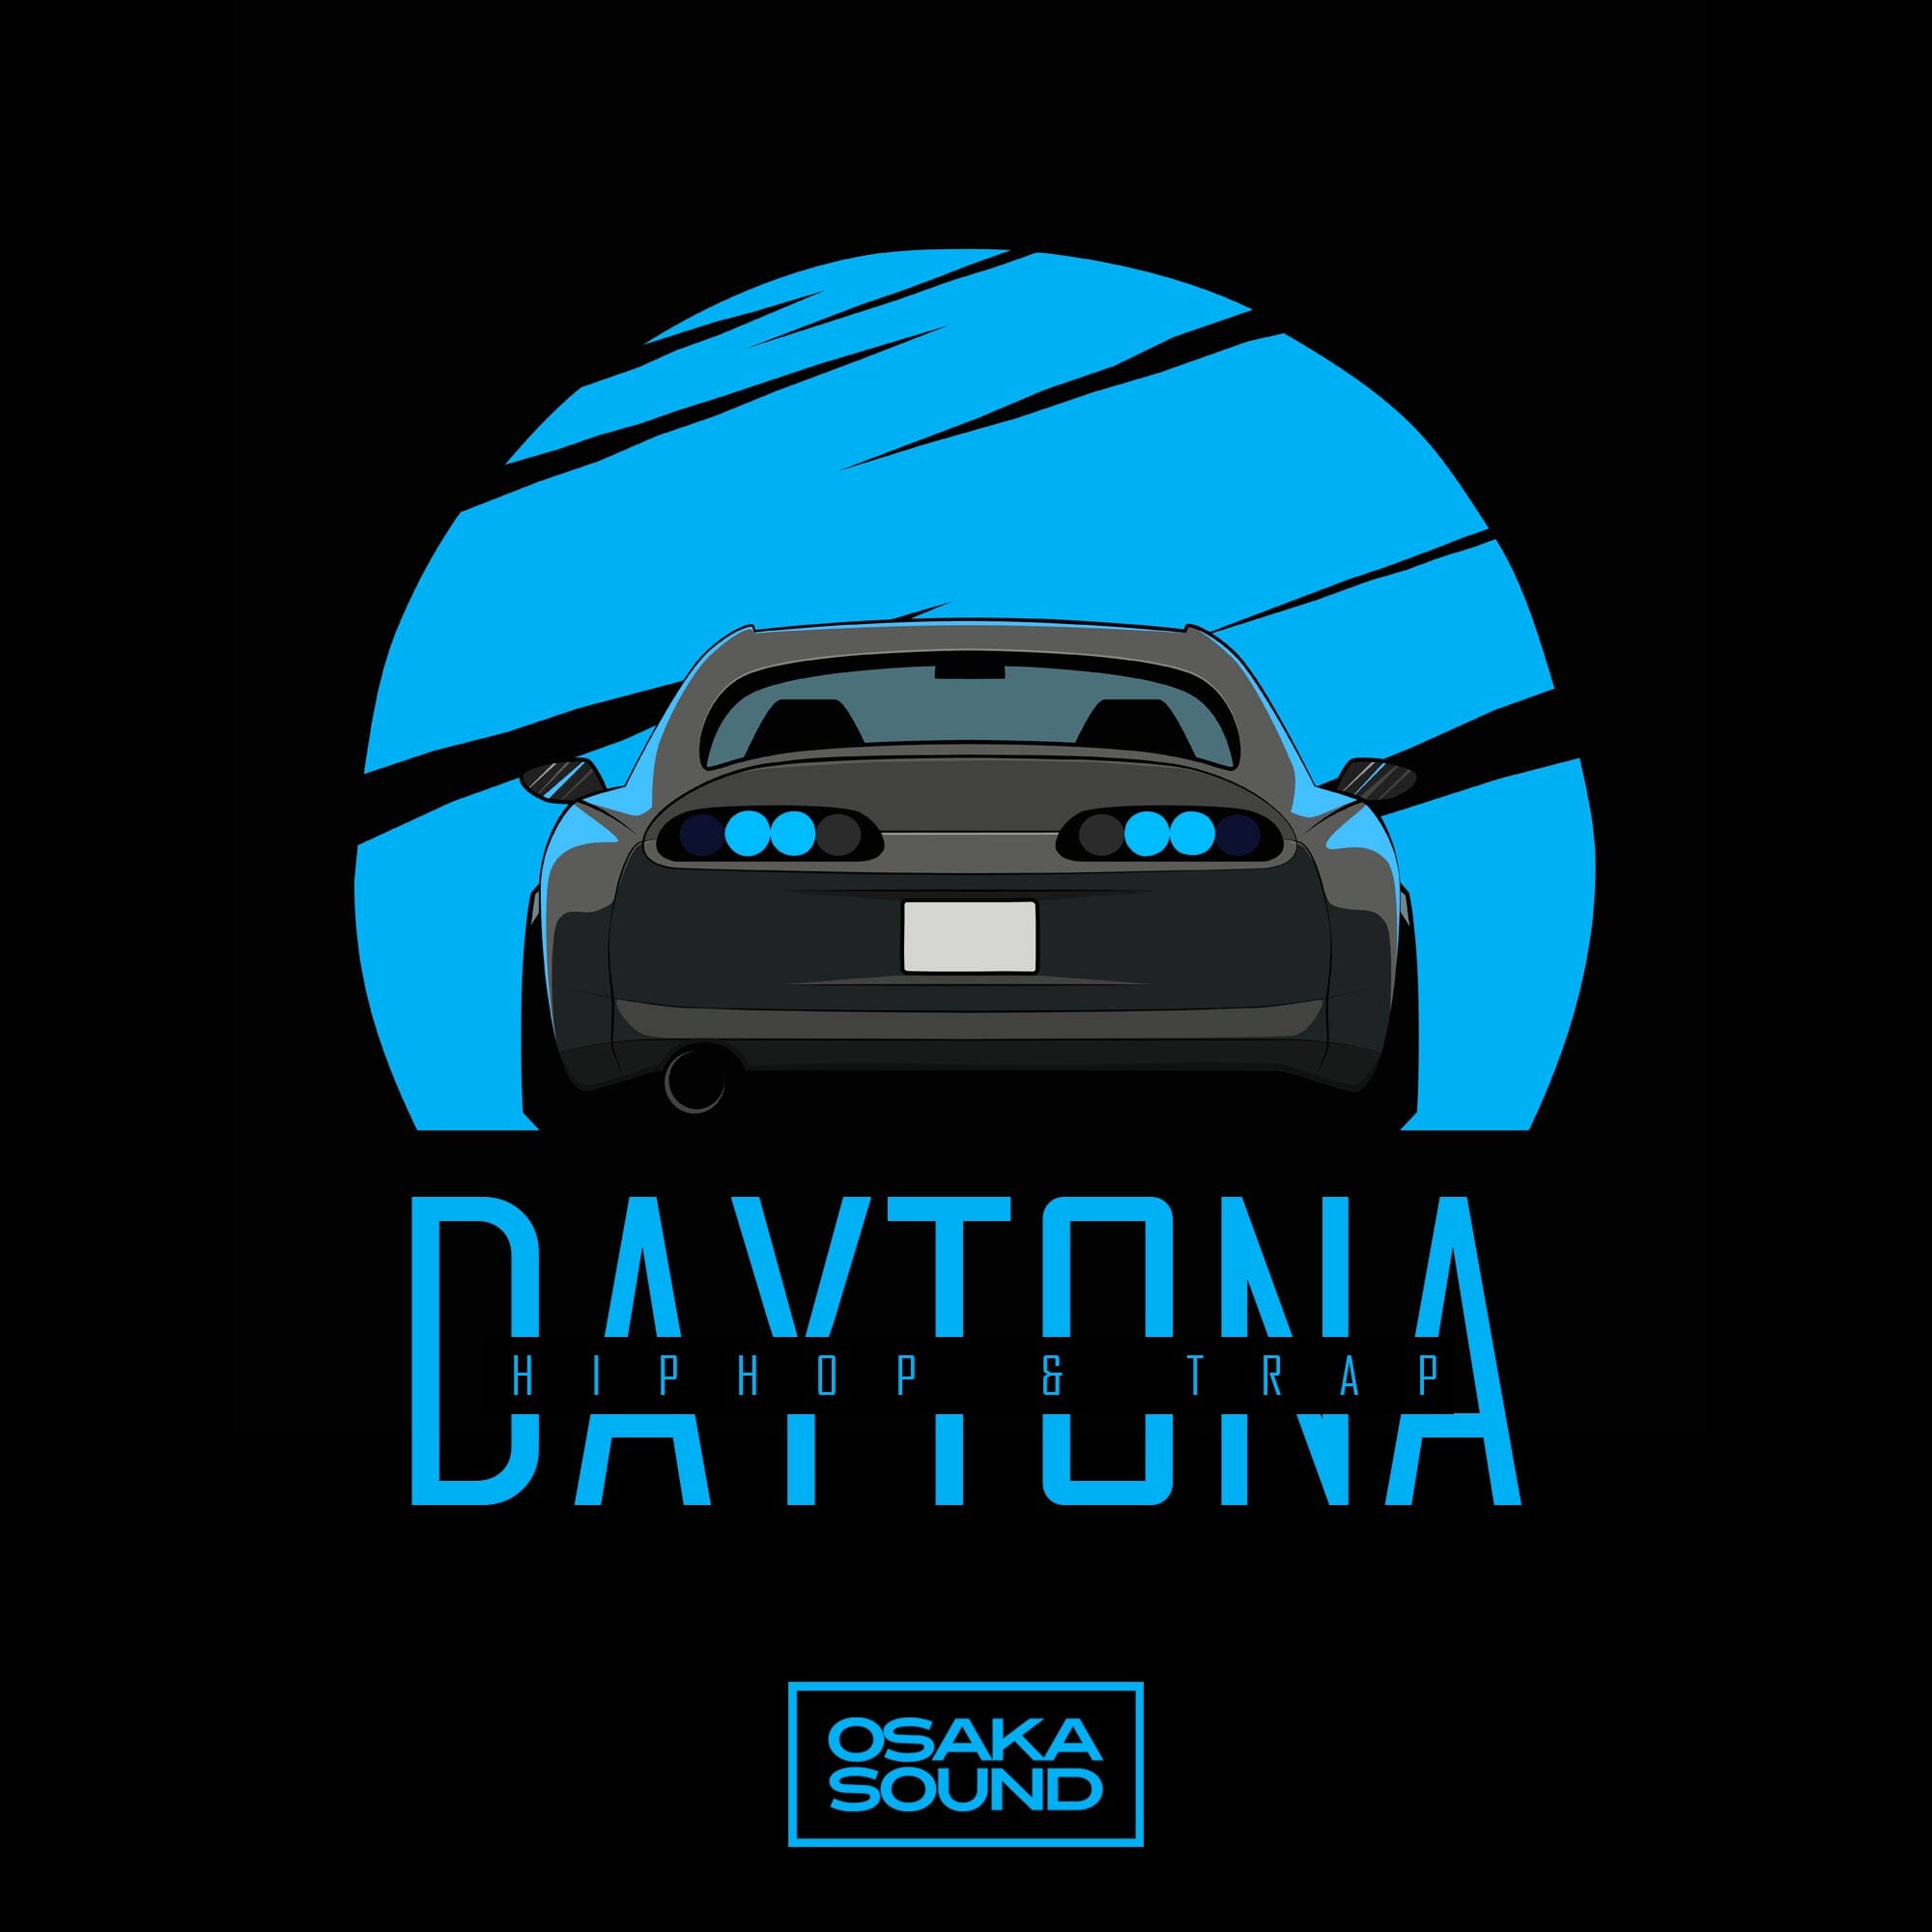 Daytona 2 </br> Hip Hop & Trap Sample Pack Osaka Sound